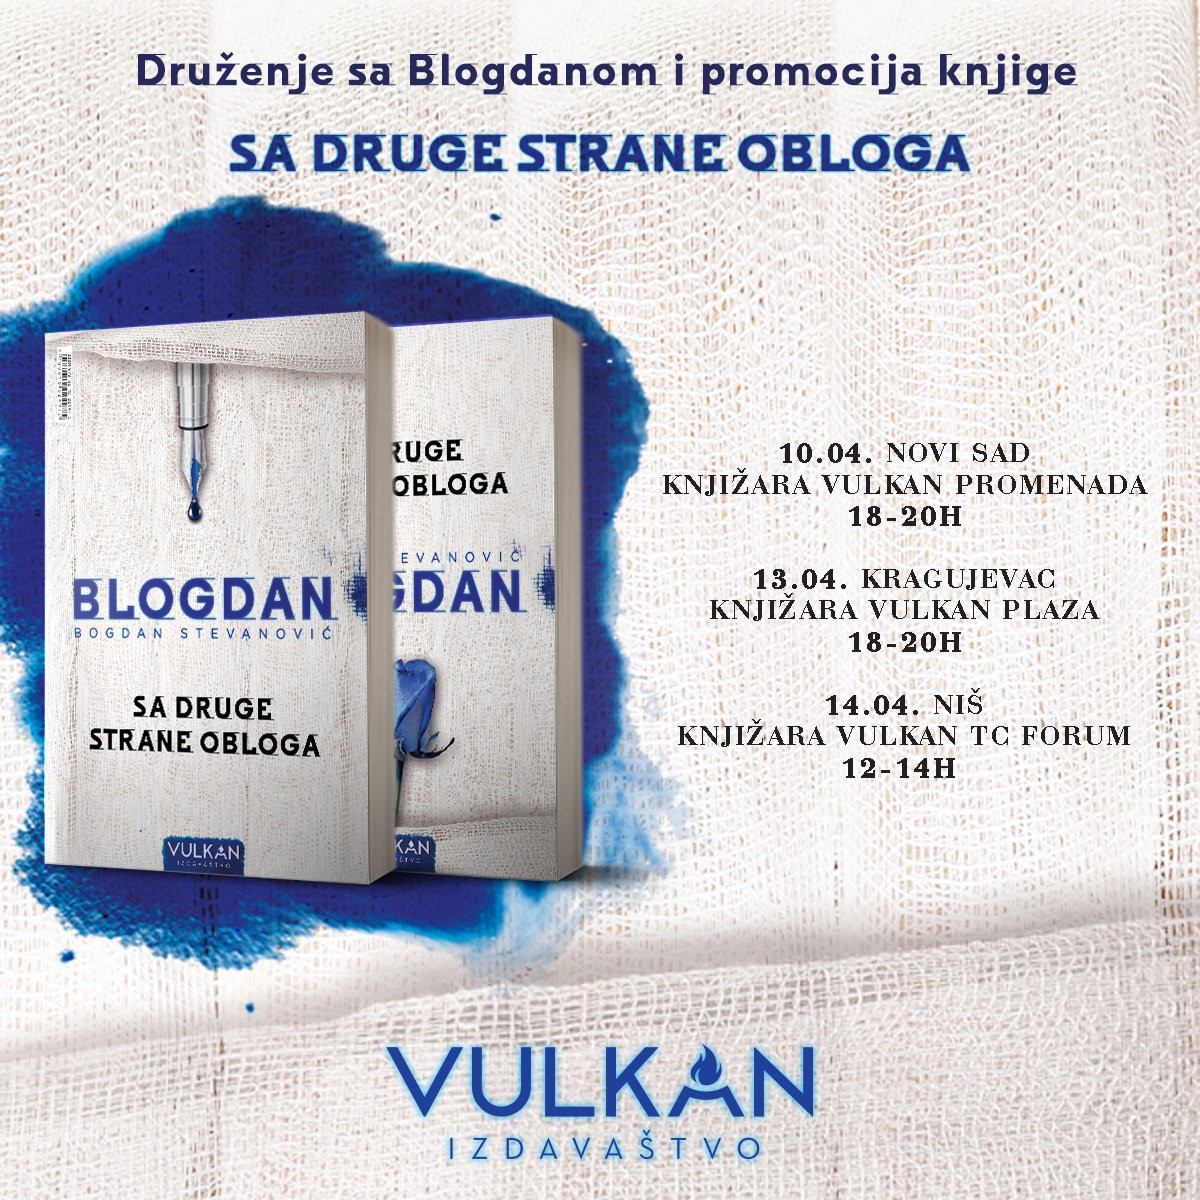 Vulkan izdavatvo vas poziva na druenje sa Bogdanom Stevanoviem Blogdanom i promociju knjige Sa druge strane obloga, foto: Promo